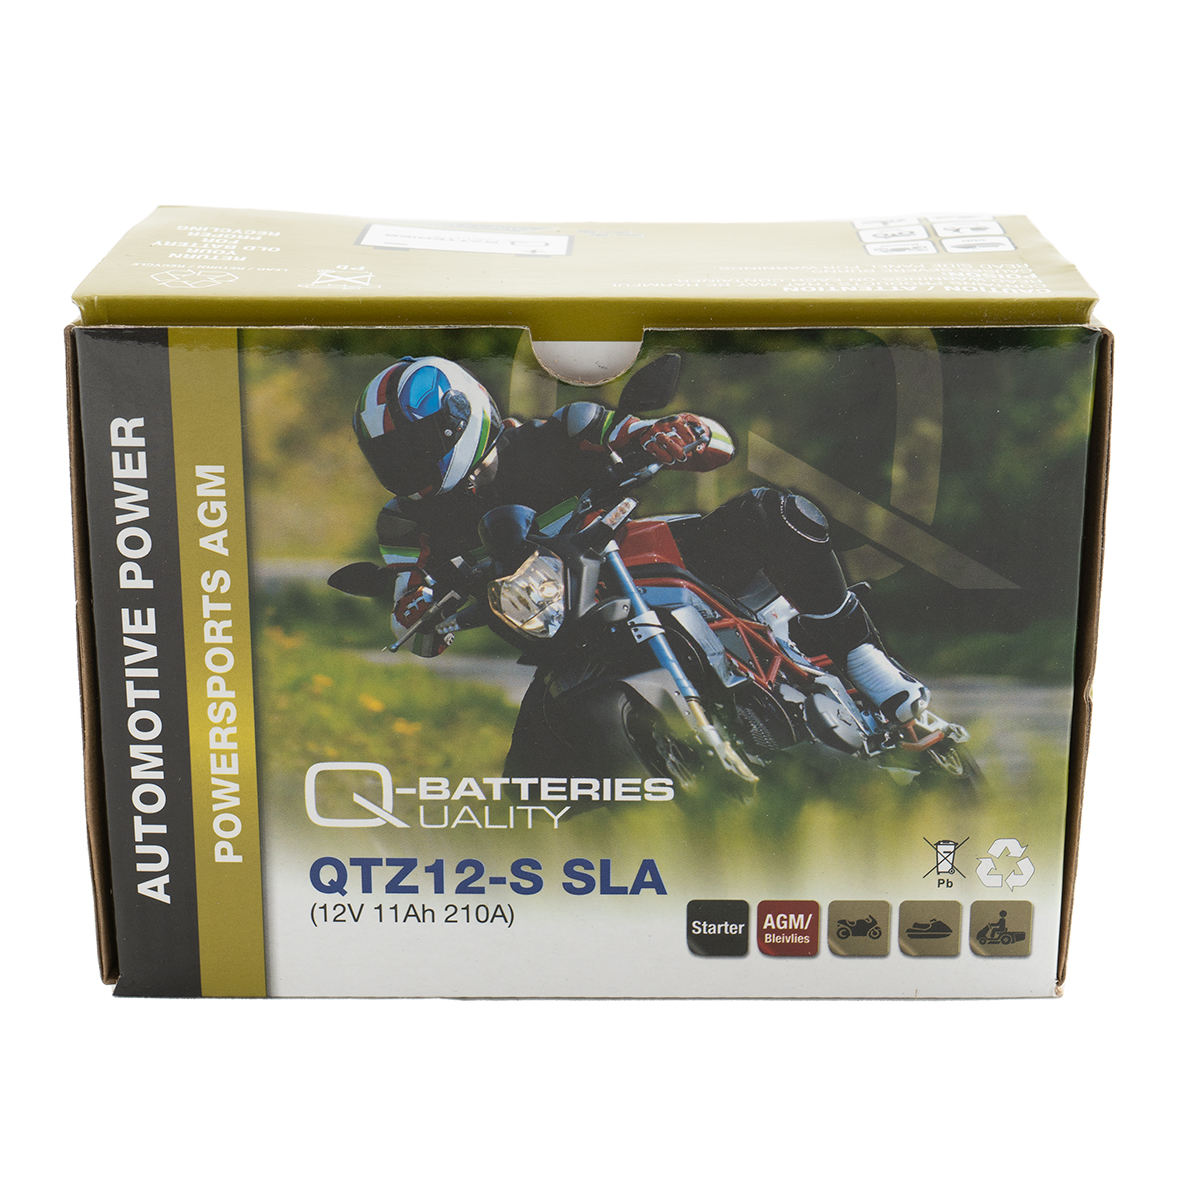 Q-Batteries QTZ12-S AGM Motorradbatterie 12V 11Ah 210A 51121